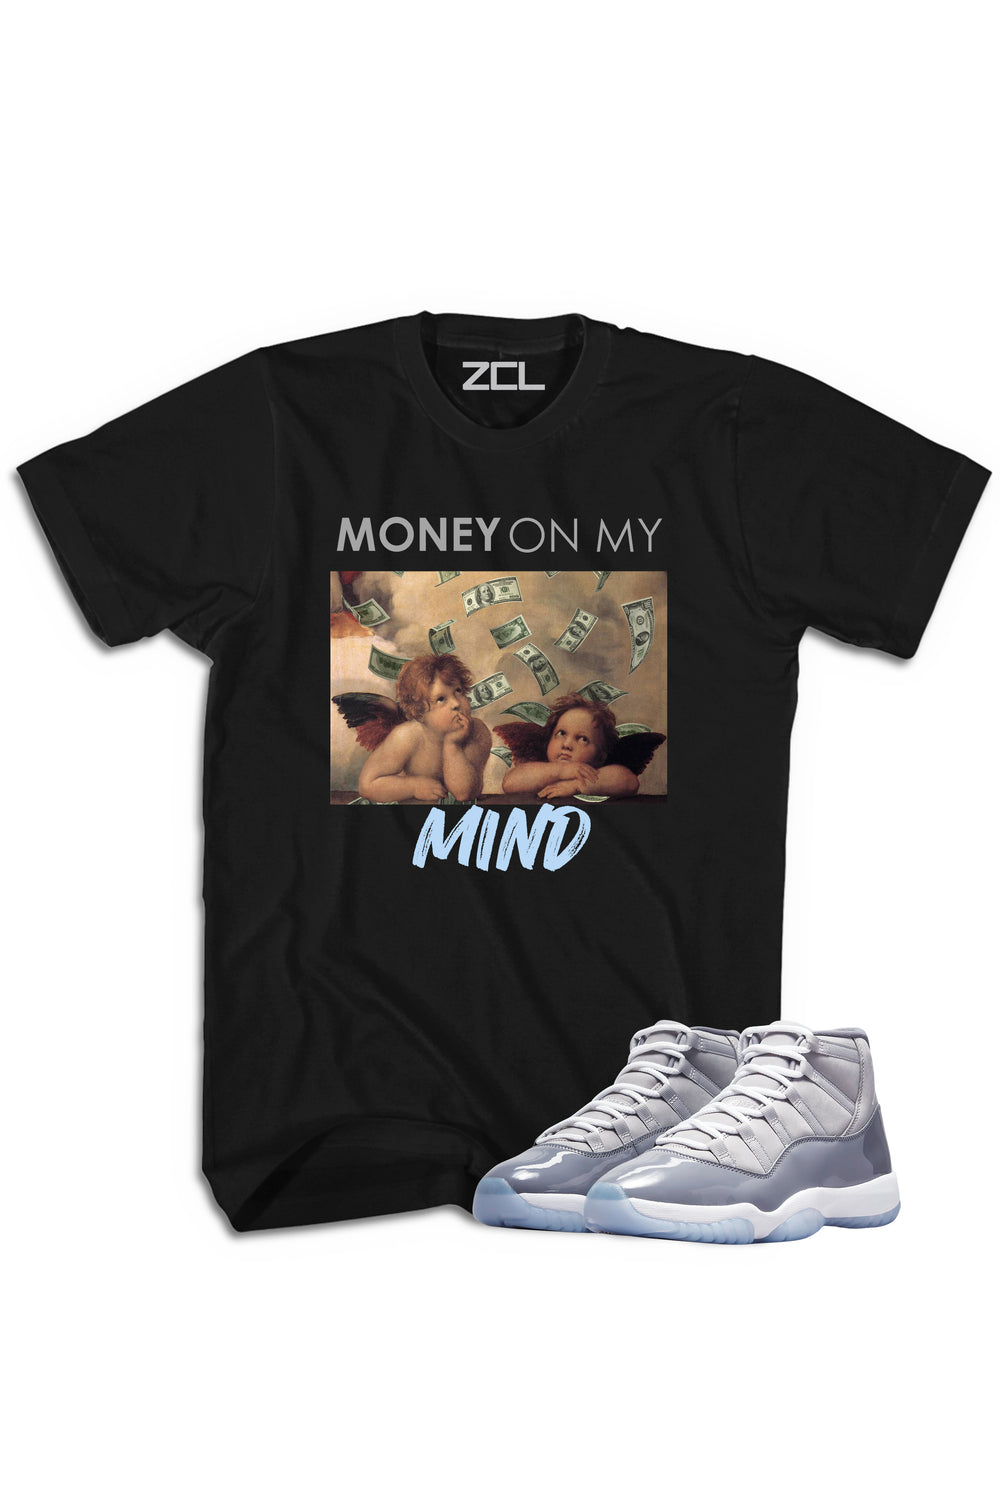 Air Jordan 11 "Money On My Mind" Tee Cool Grey - Zamage